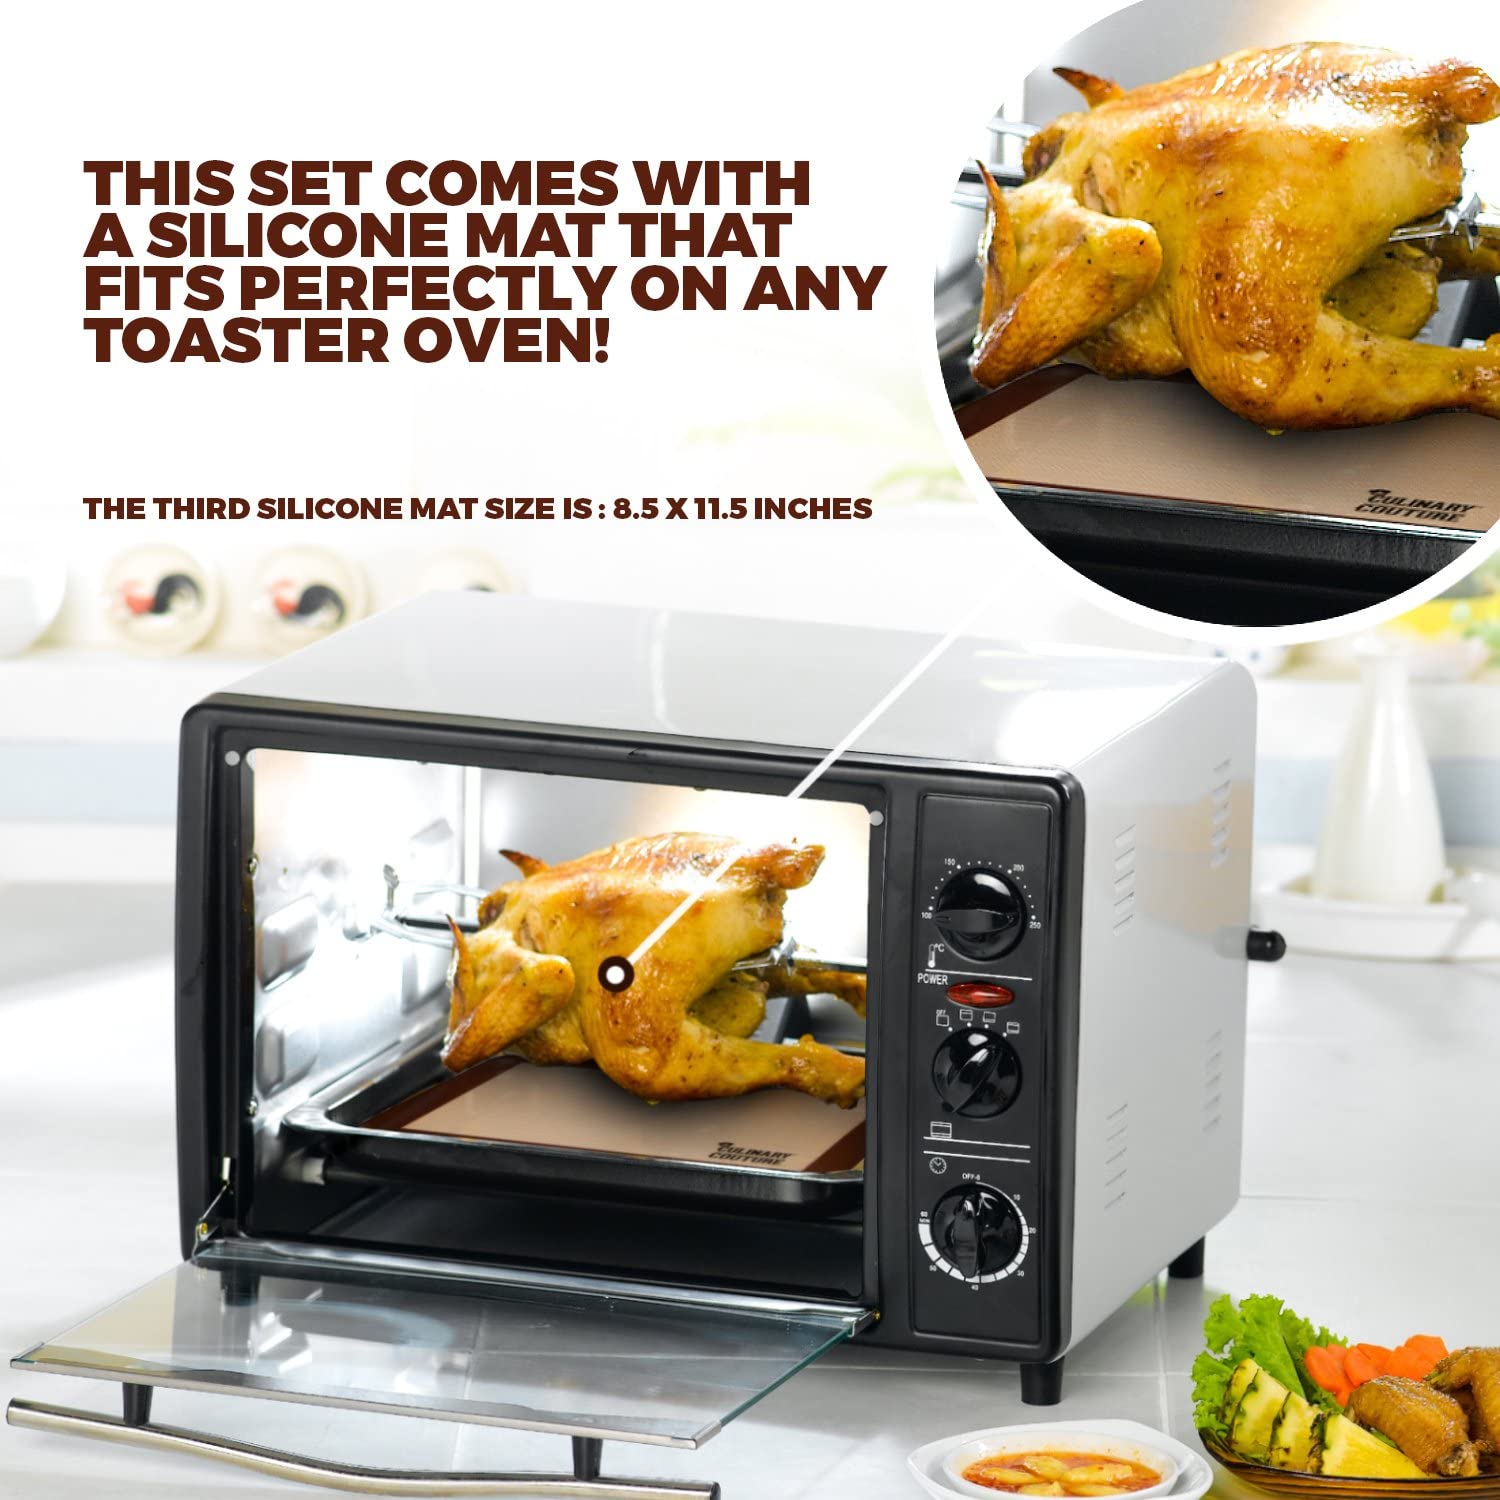 Silicone Baking Mat 12x16 - Creative Kitchen Fargo